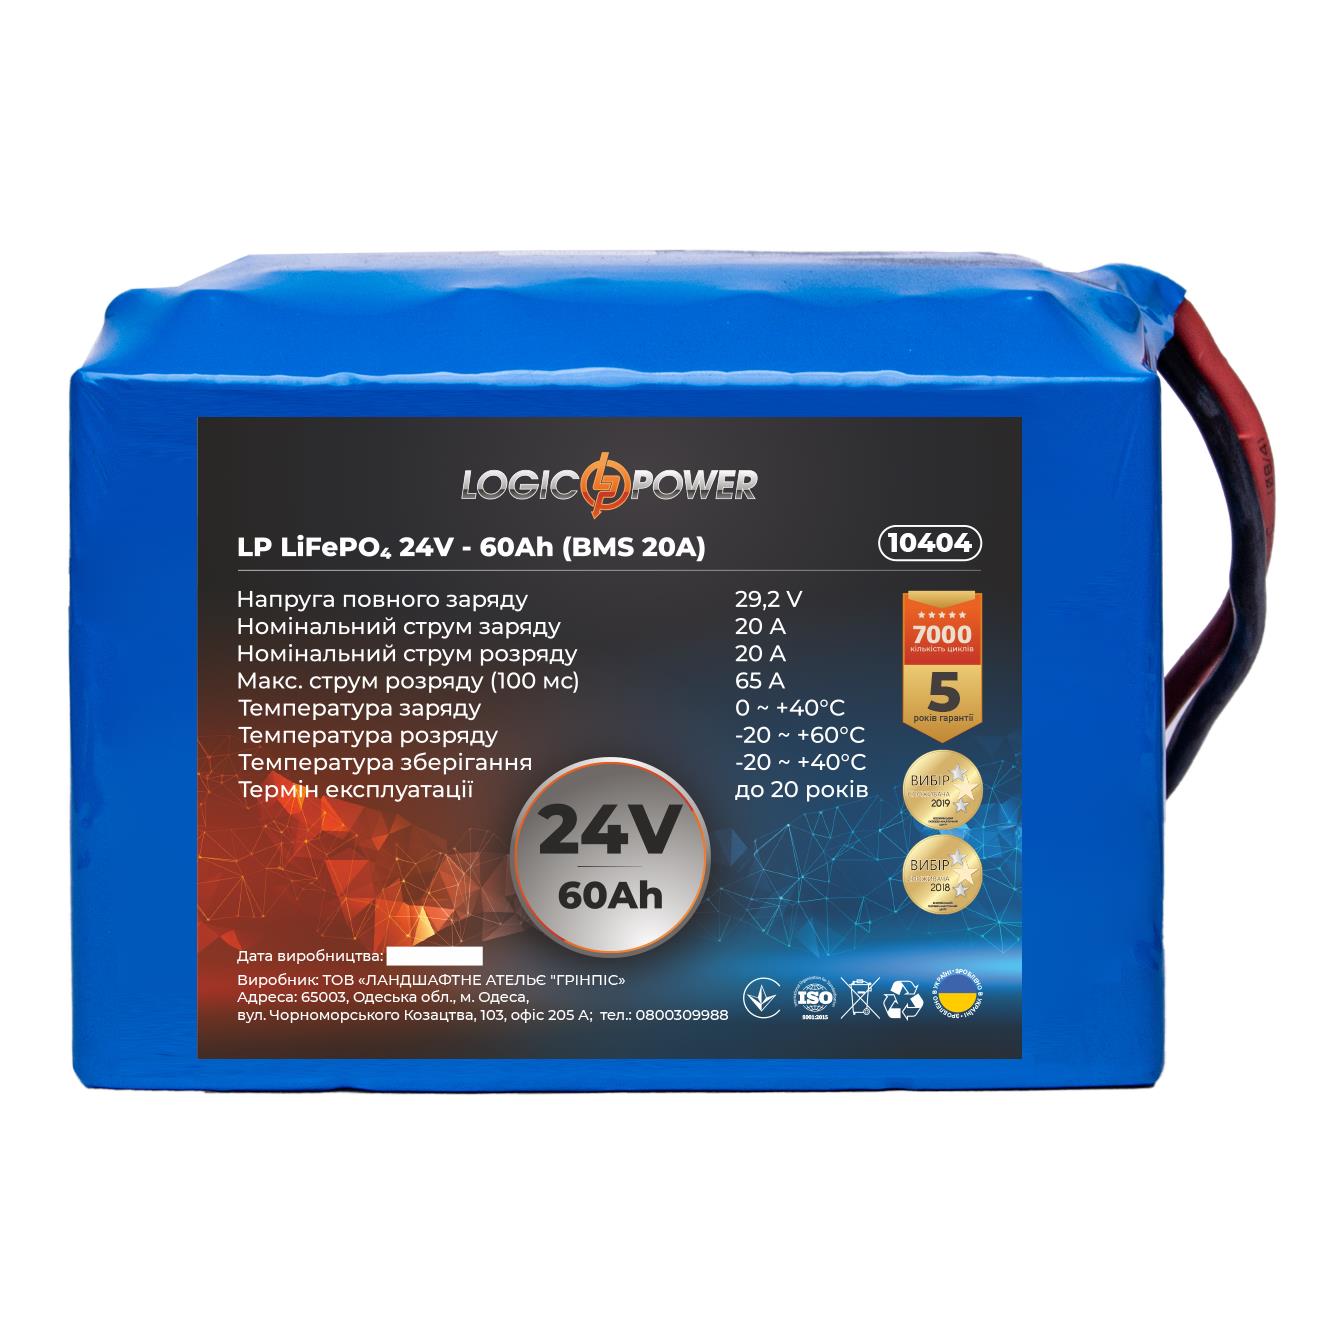 LogicPower LP LiFePO4 24V - 60 Ah (BMS 20A) (10404)